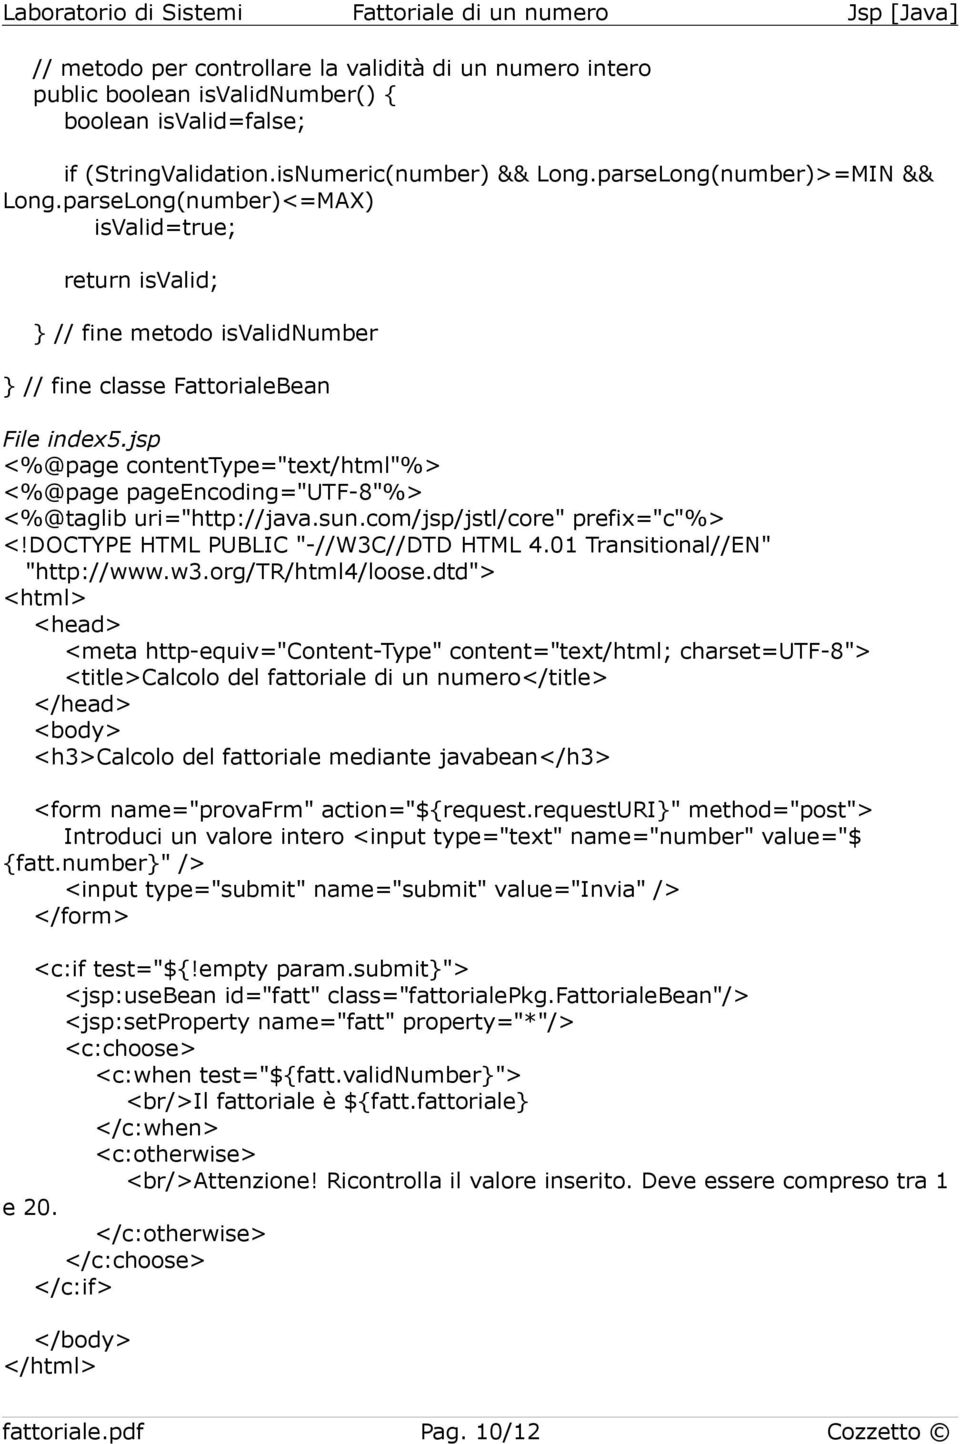 jsp <%@page contenttype="text/html"%> <%@page pageencoding="utf-8"%> <%@taglib uri="http://java.sun.com/jsp/jstl/core" prefix="c"%> <!DOCTYPE HTML PUBLIC "-//W3C//DTD HTML 4.